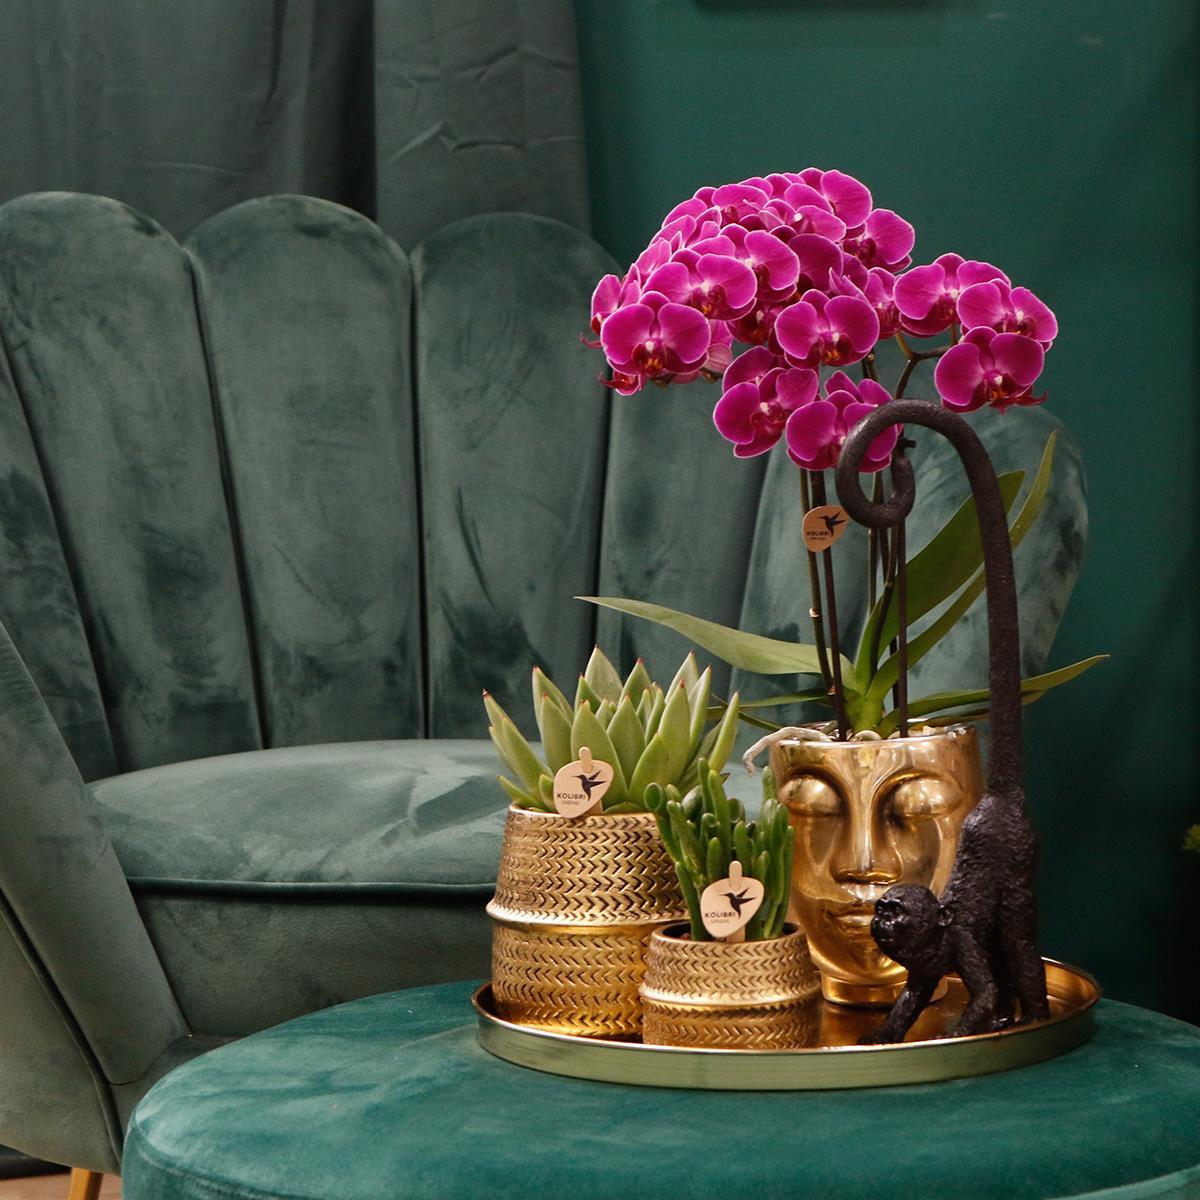 Kolibri Company | Gift set Hotel Chic| Plantenset met paarse Phalaenopsis Orchidee en Succulenten incl. keramieken sierpotten